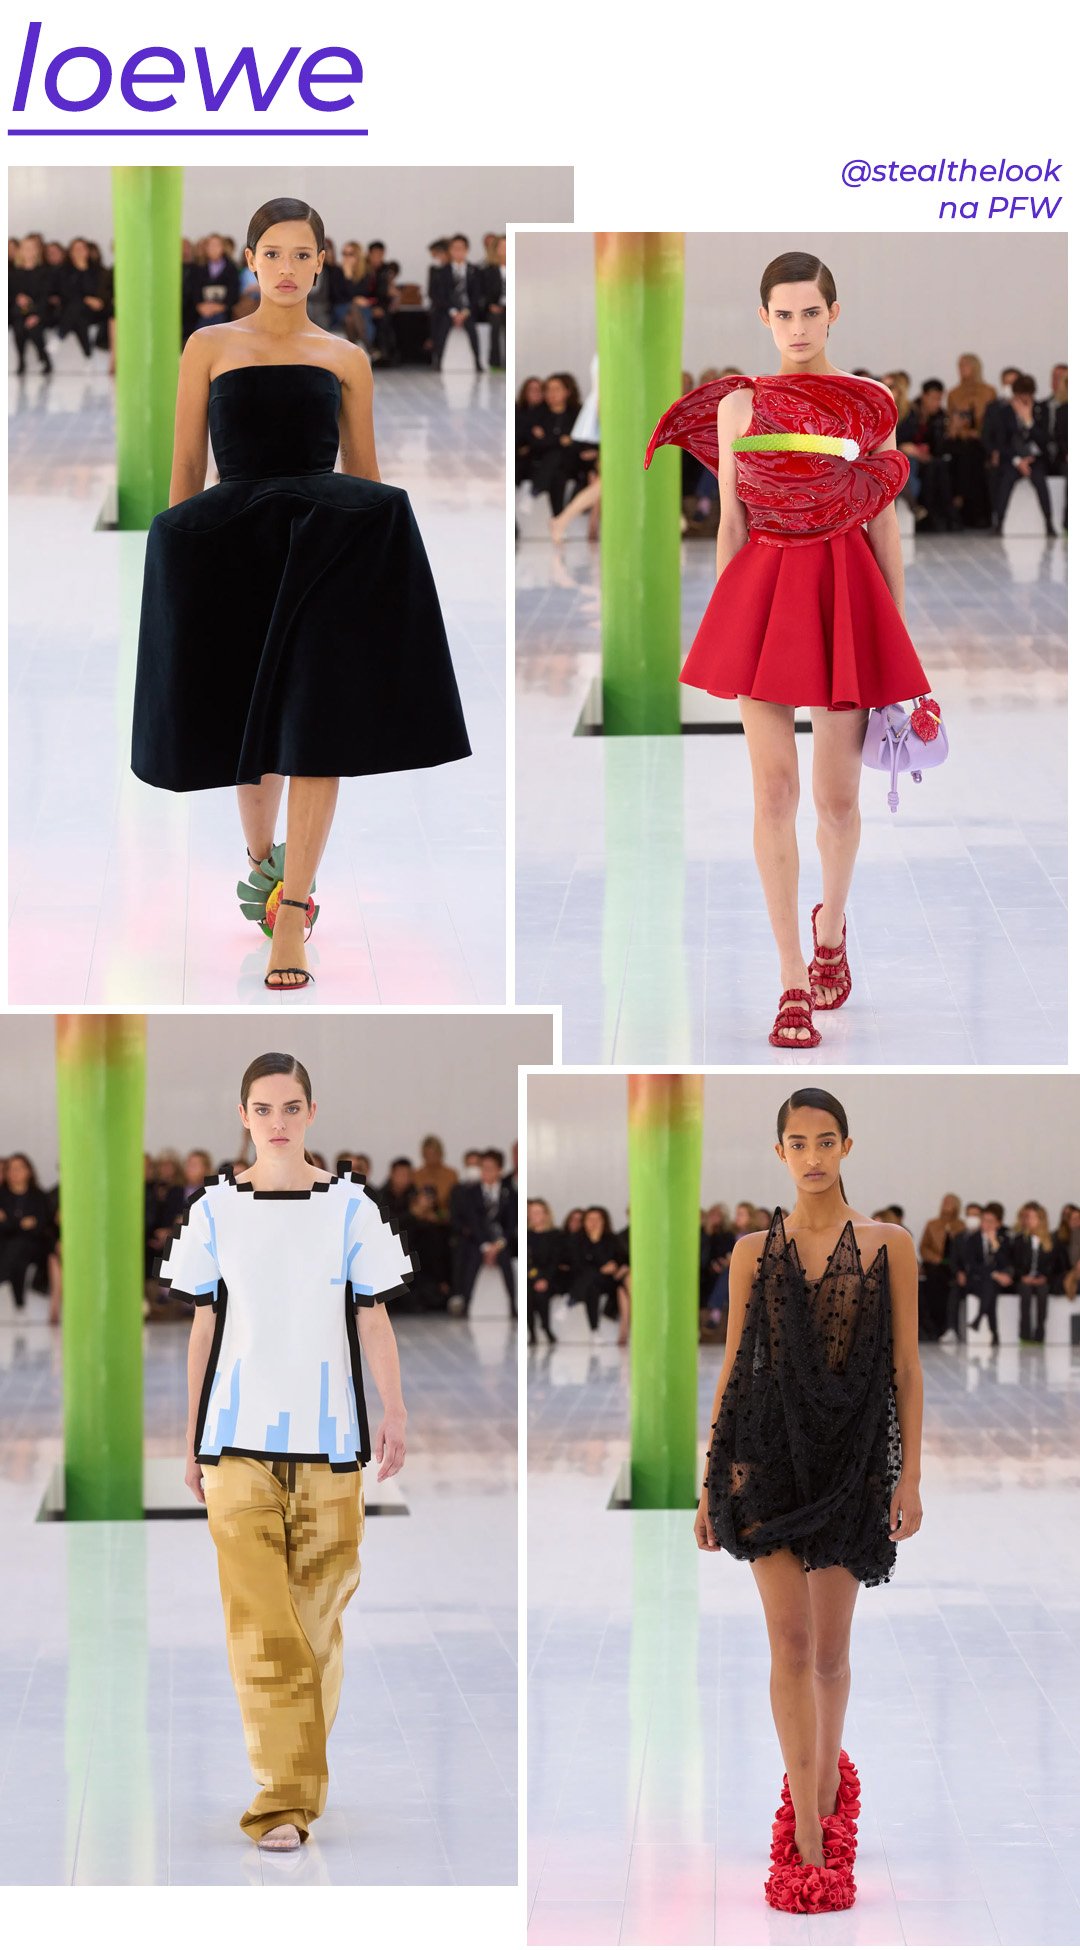 Loewe S/S 2023 - roupas diversas - Paris Fashion Week - Primavera - modelo andando pela passarela - https://stealthelook.com.br